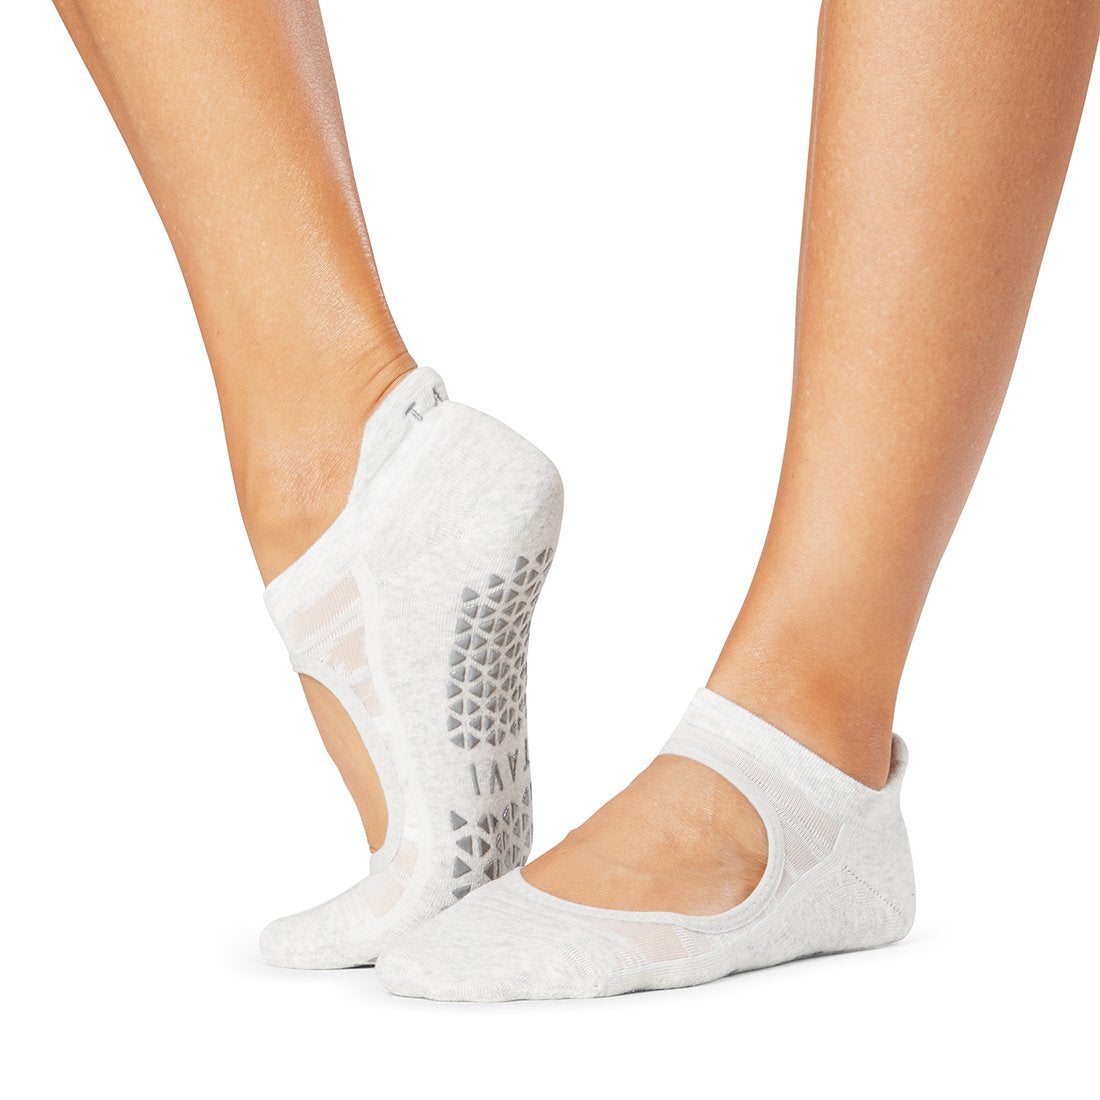 Tavi Noir Buzz Emma Grip Socks suitable for Yoga, Pilates- Medium/ New